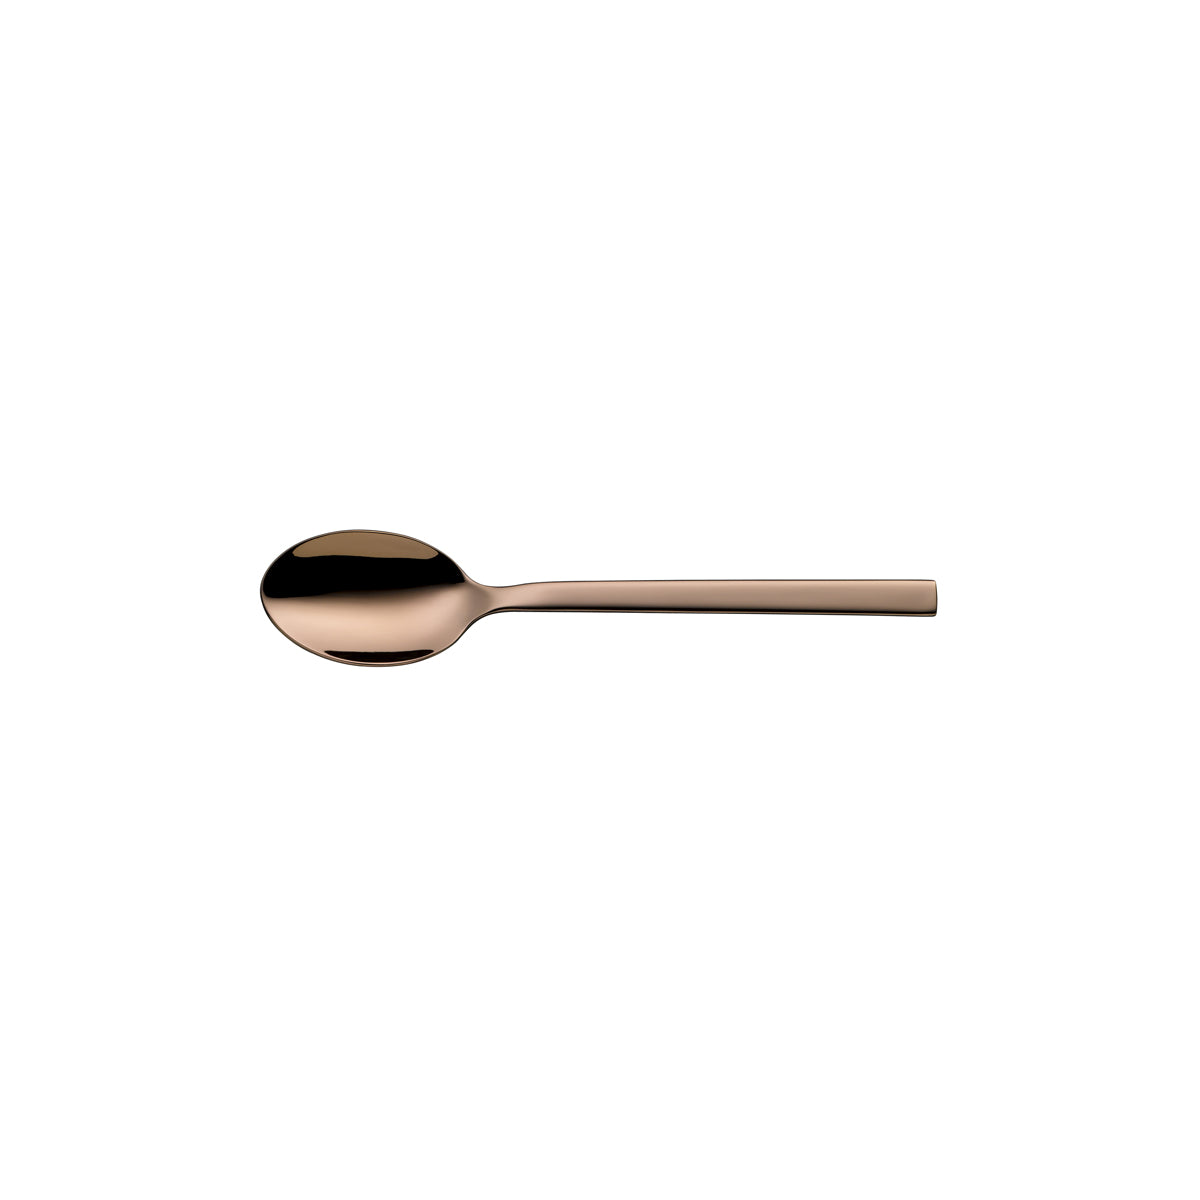 59.5301.8100 WMF Unic Table Spoon Copper Tomkin Australia Hospitality Supplies